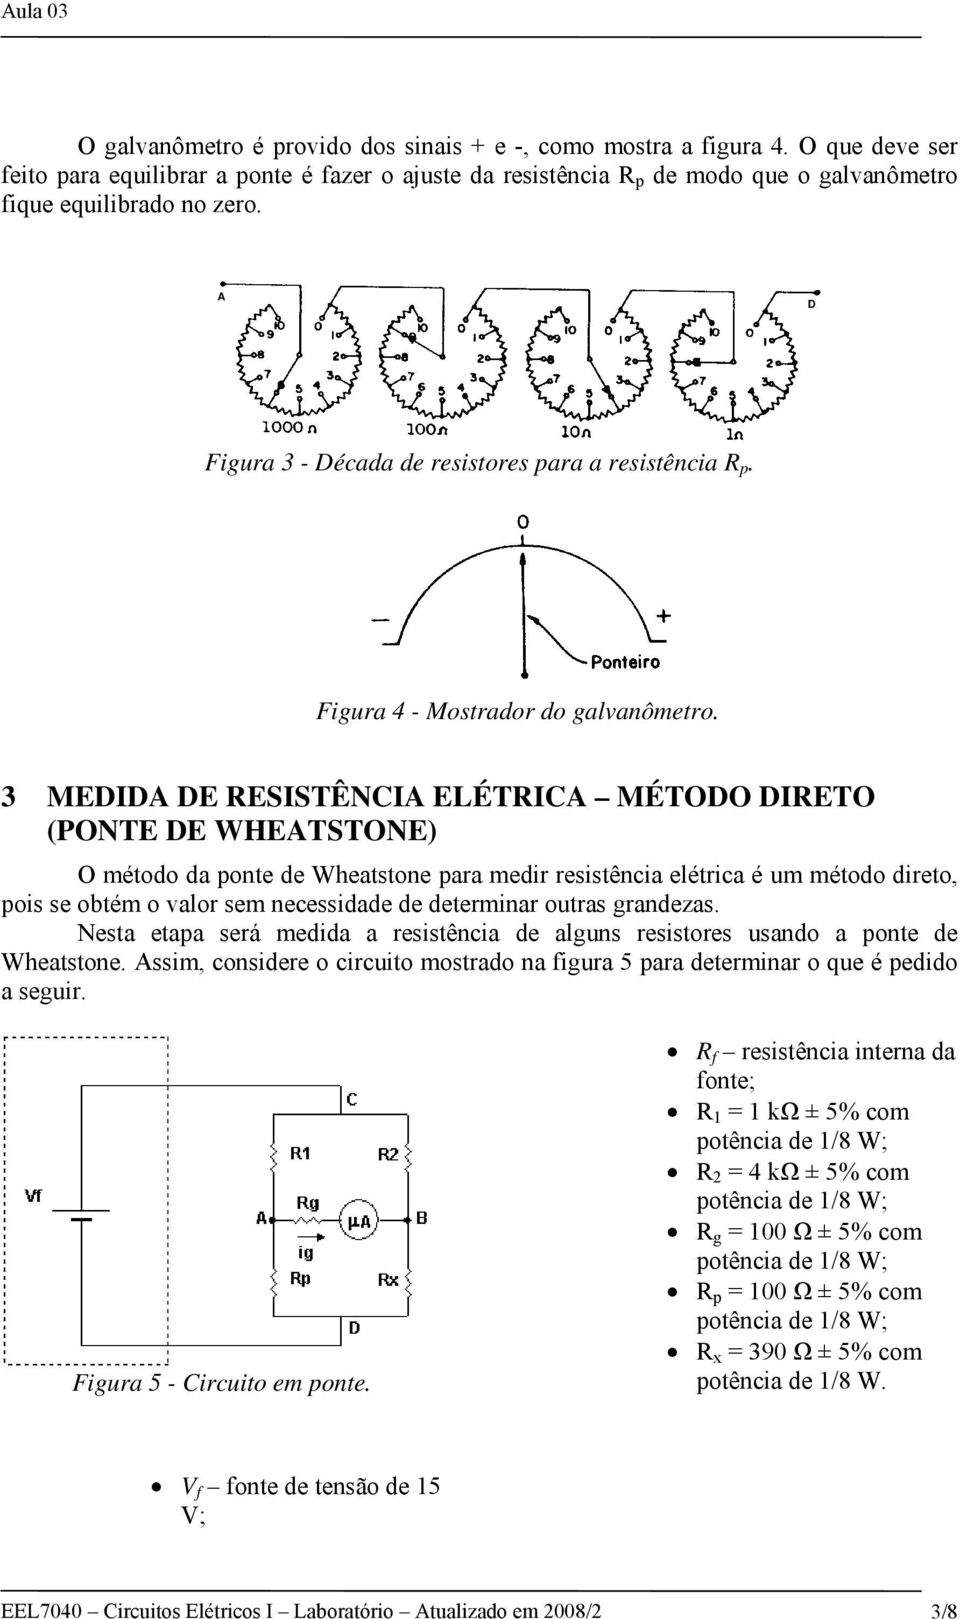 Figura 4 - Mostrador do galvanômetro.